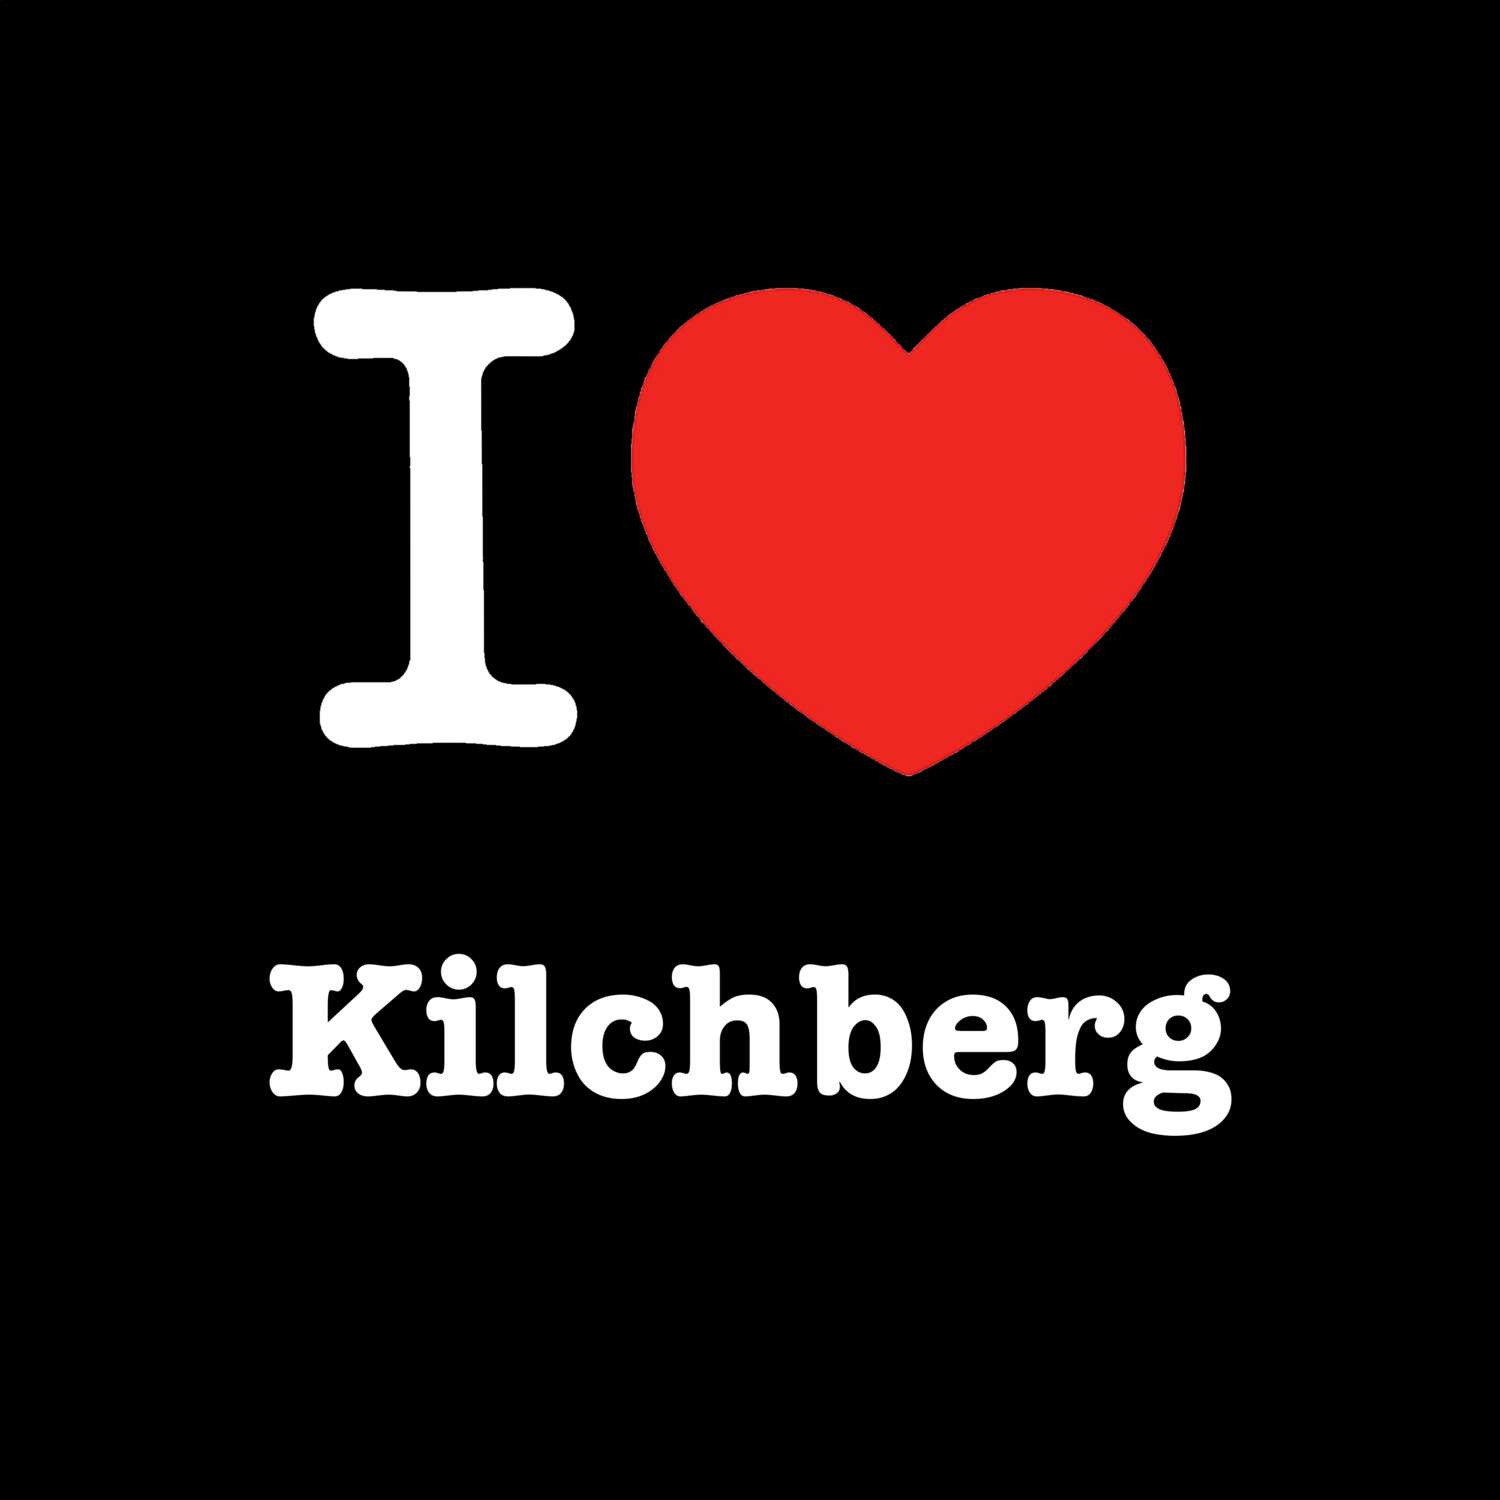 Kilchberg T-Shirt »I love«